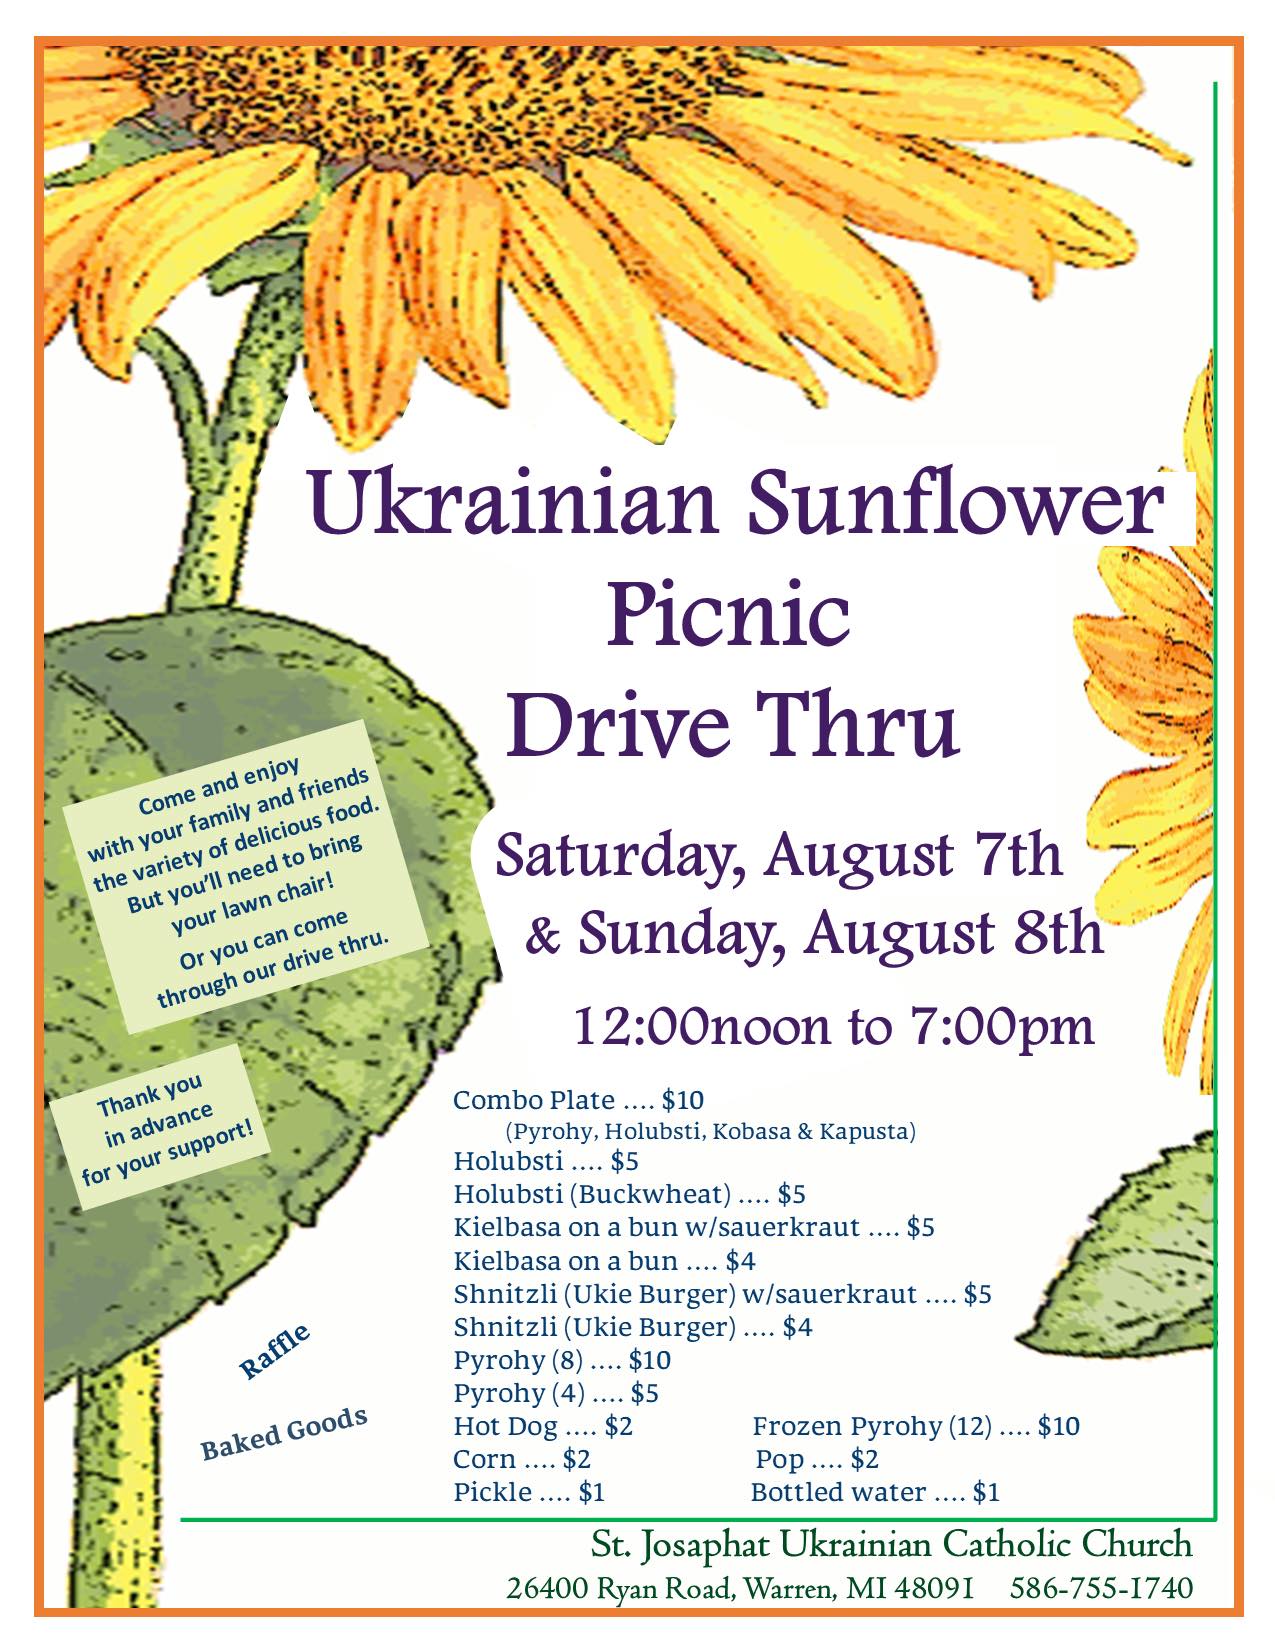 Ukrainian Sunflower picnic drive thru in Michigan advertised by Ukrainian Selfreliance MI FCU